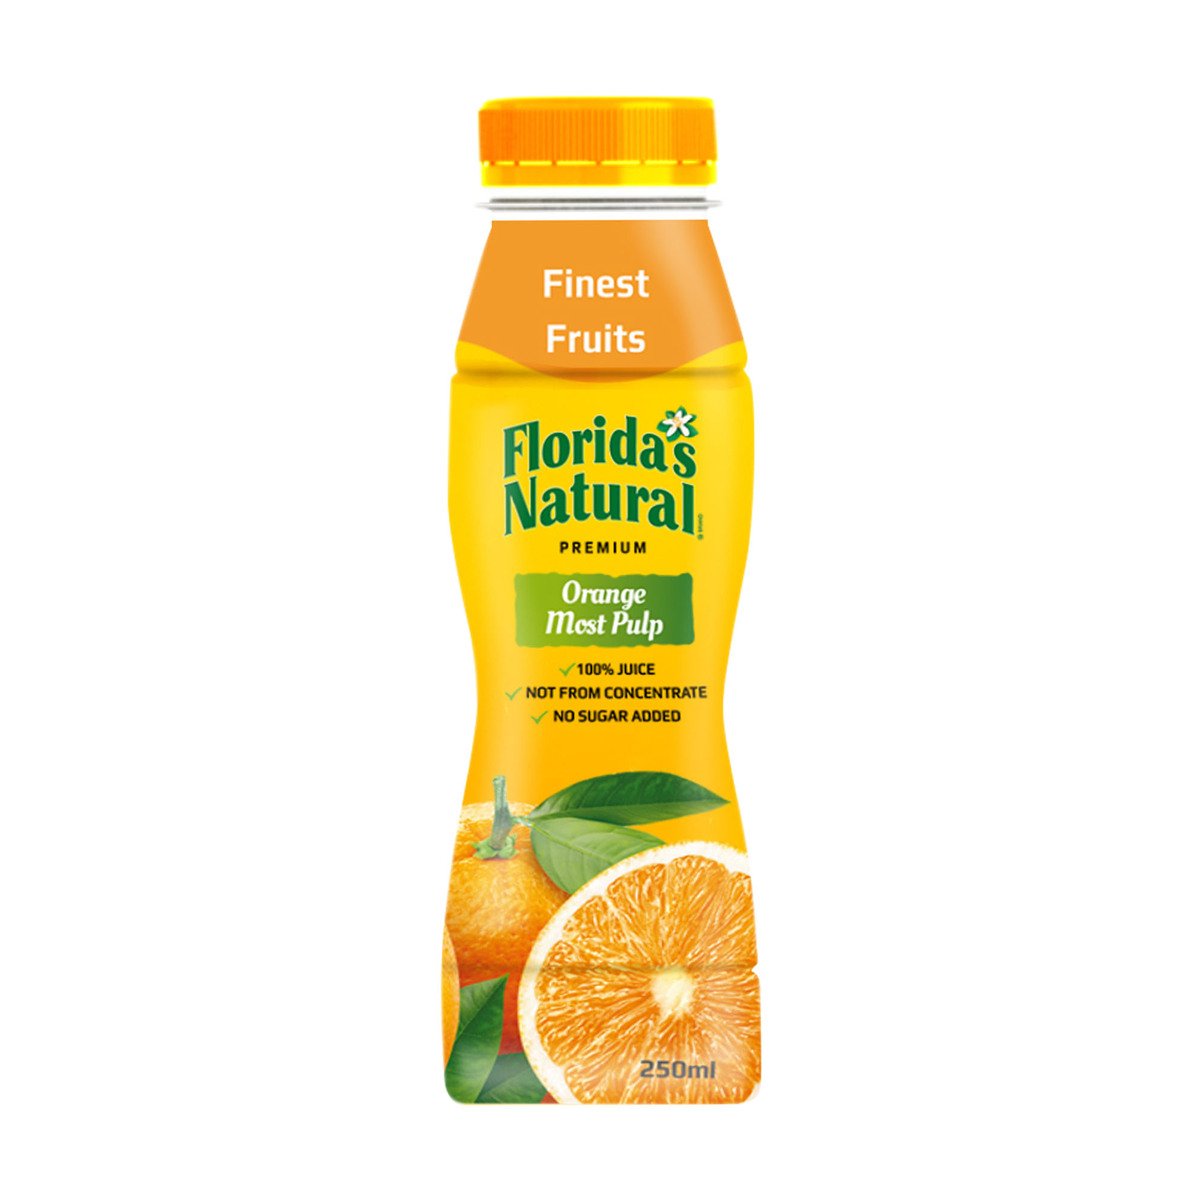 Florida's Natural Orange Most Pulp Juice 250 ml